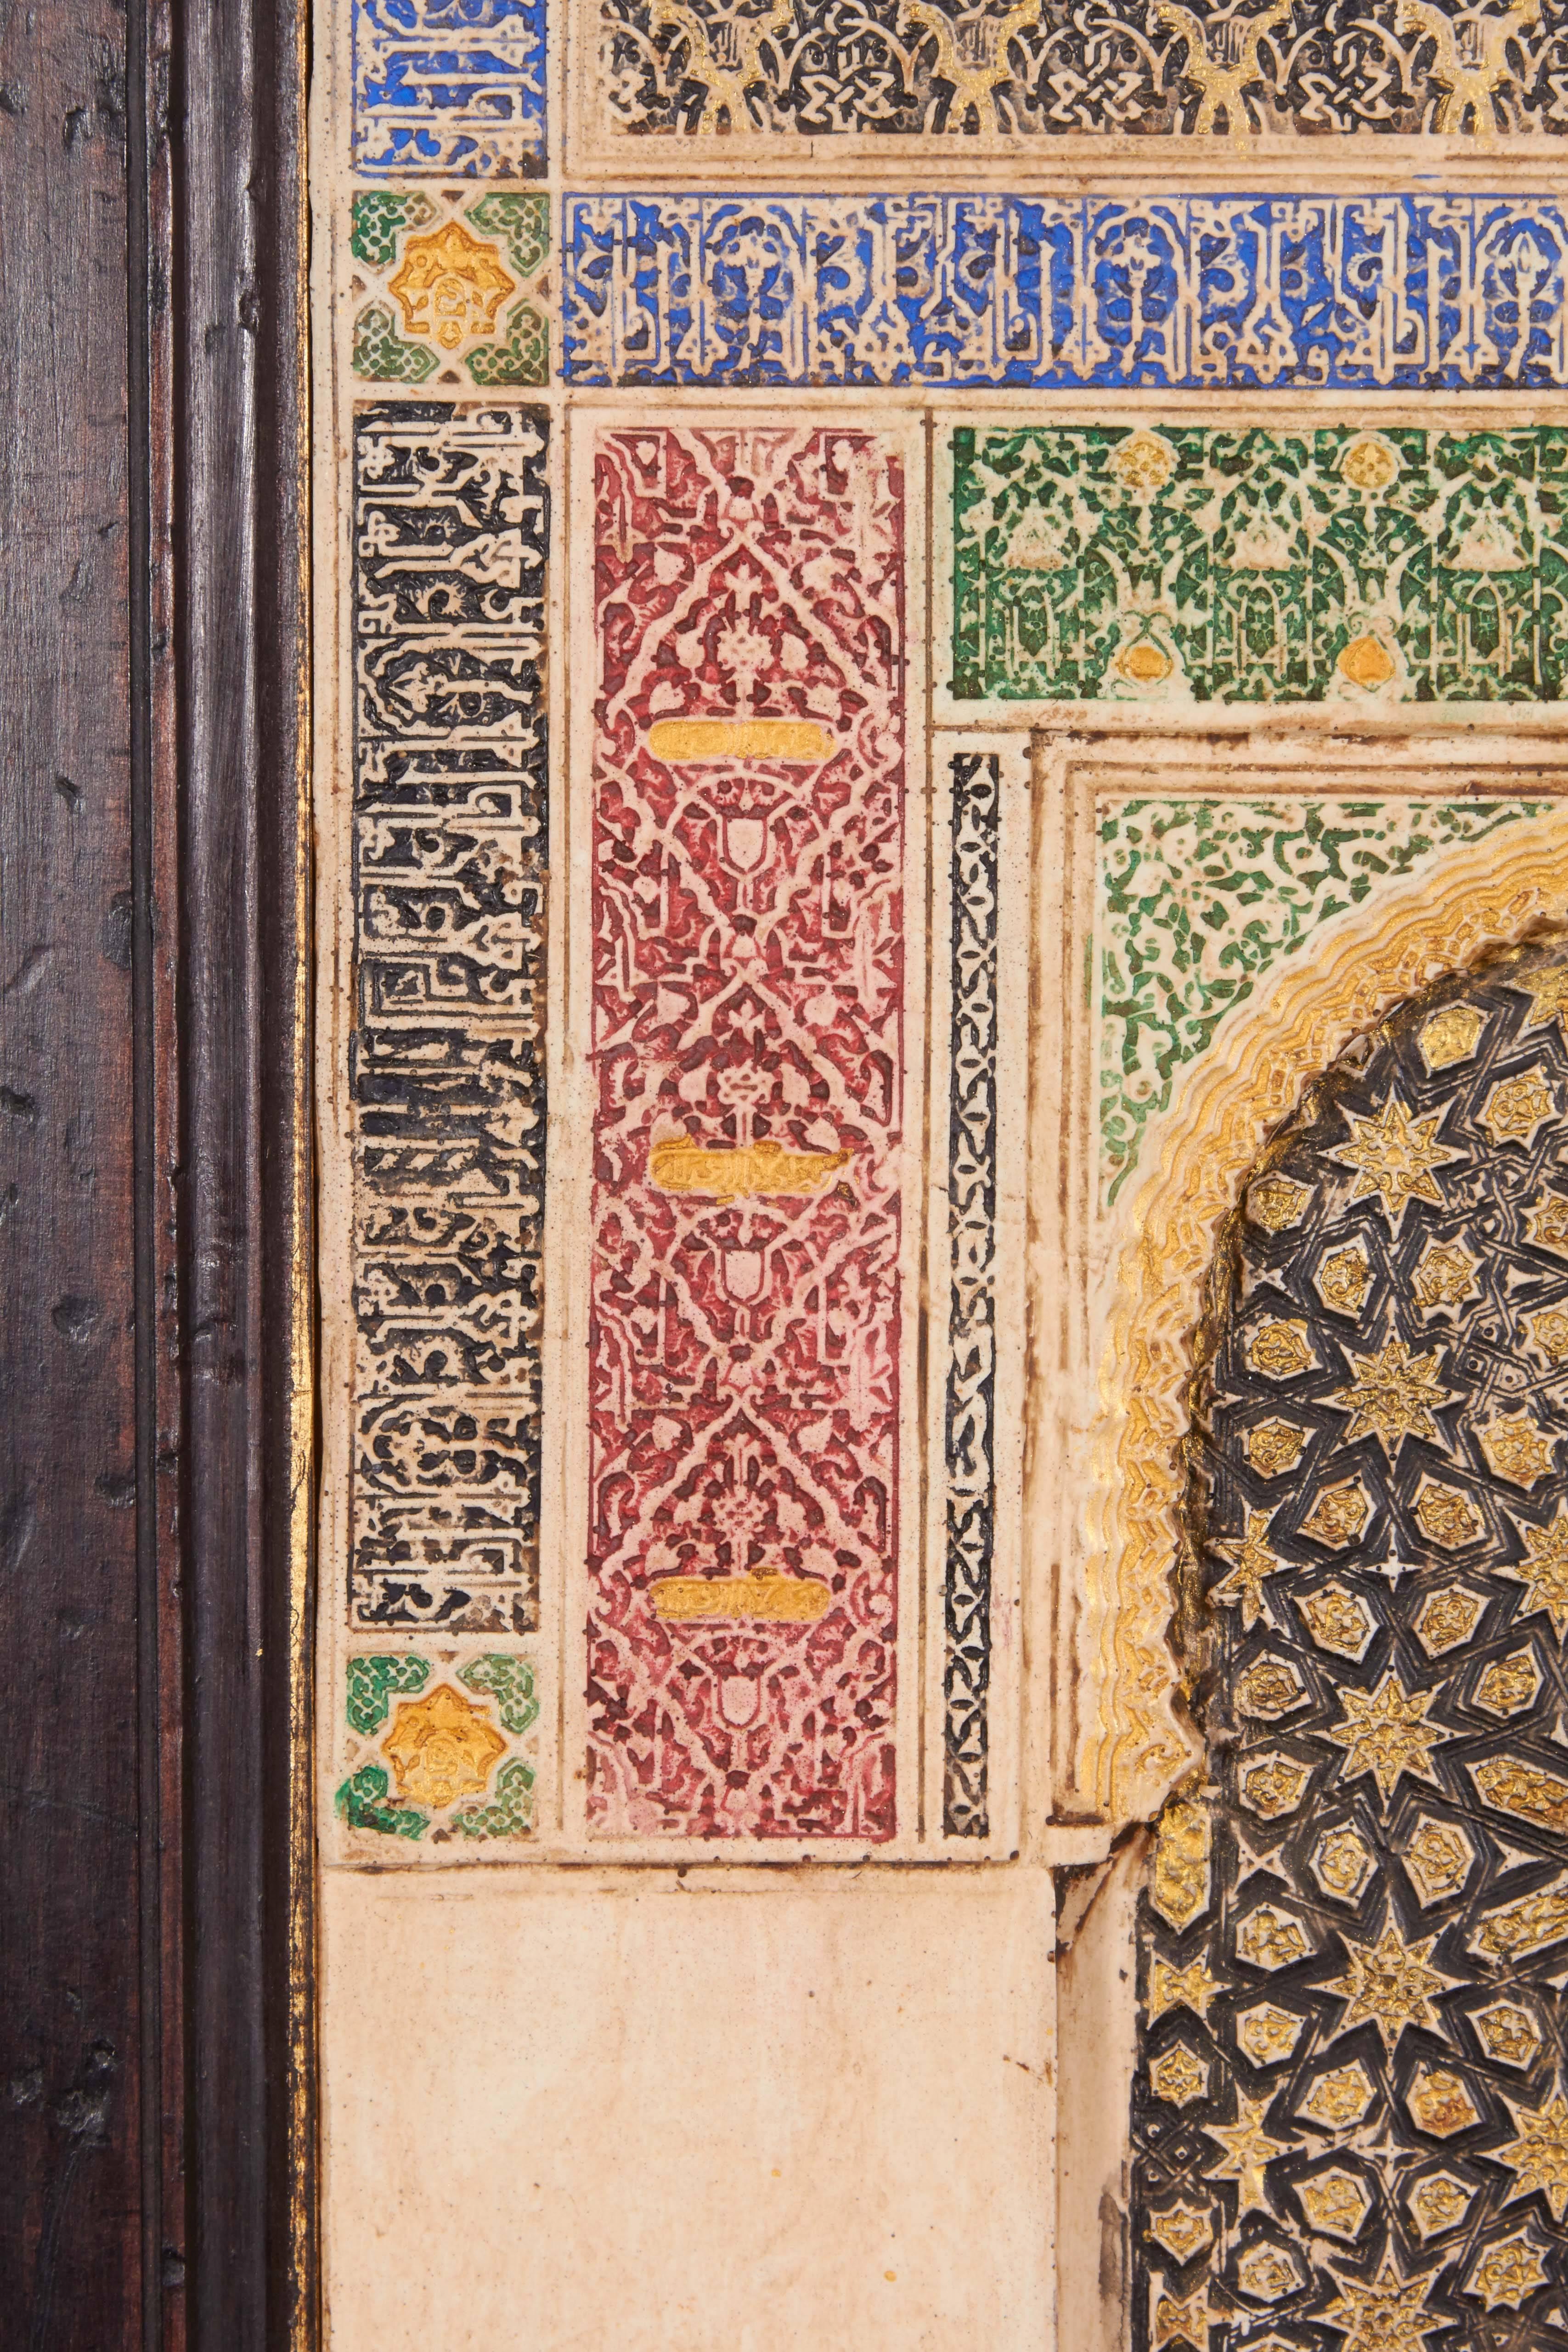 20th Century Spanish Plaster Wall Plaque Depicting the Alhambra Moorish Islamic Taste